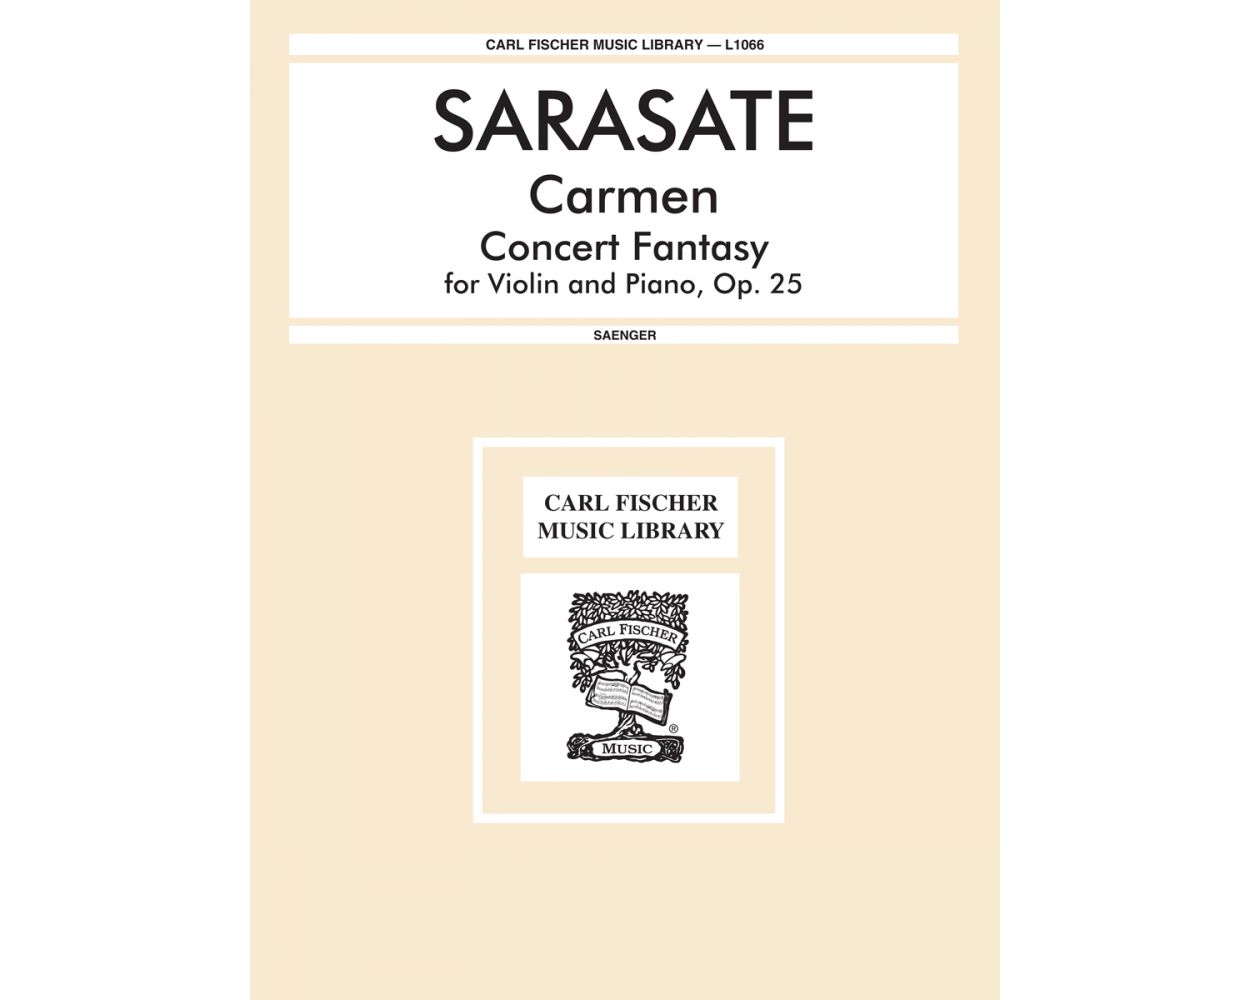 Sarasate Carmen Concert Fantasy op 25 for Violin & Piano